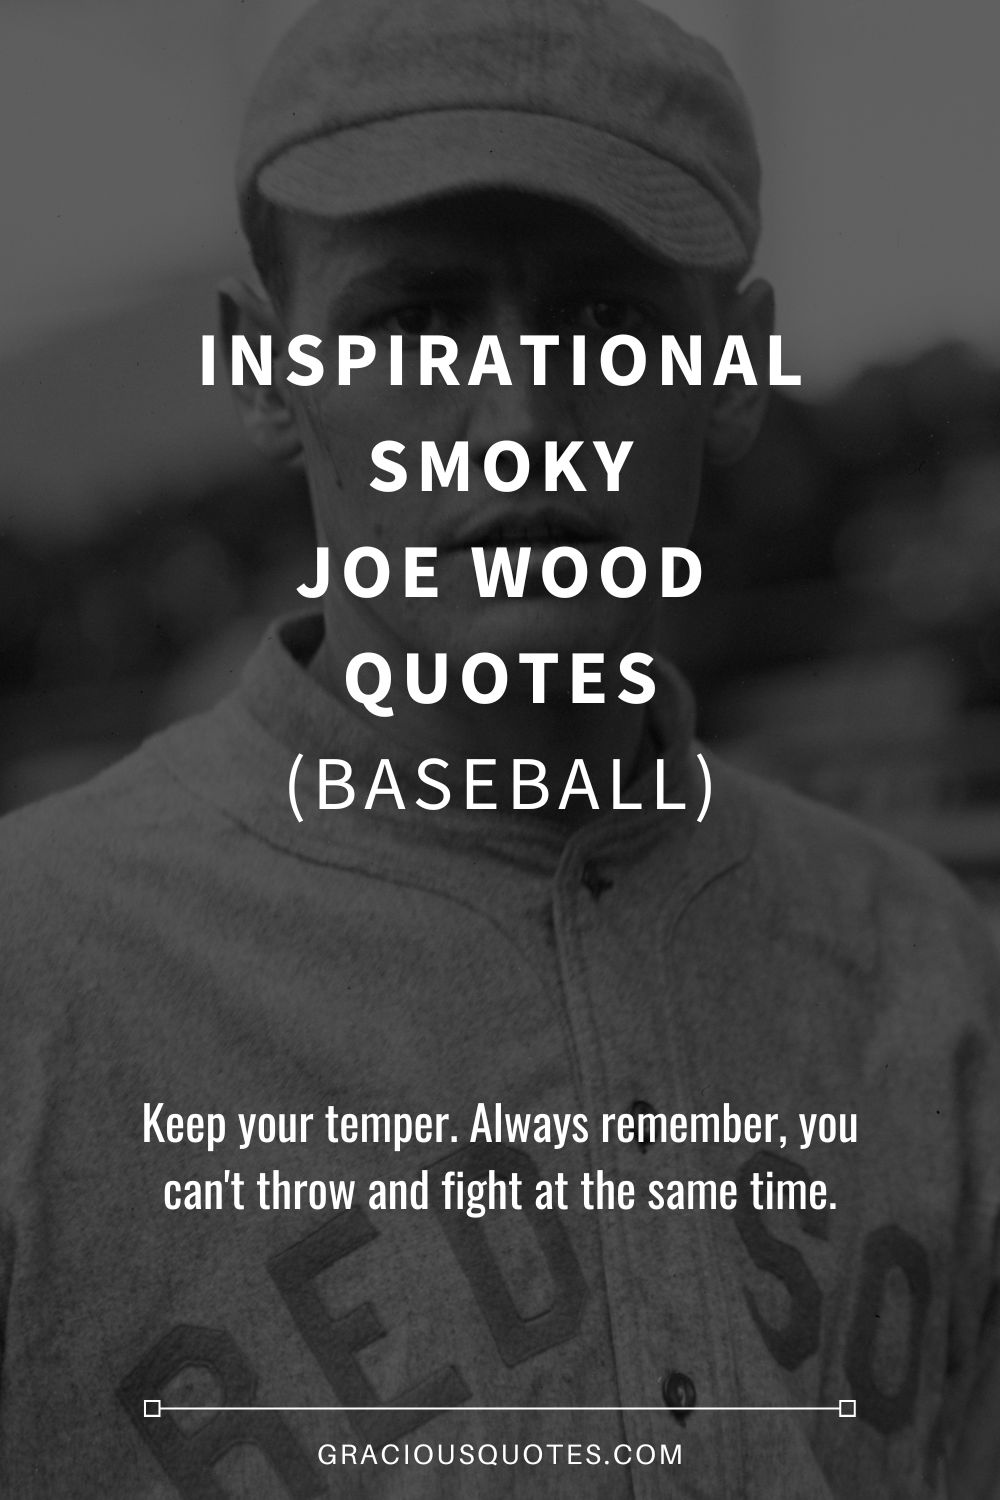 Inspirational Smoky Joe Wood Quotes (BASEBALL) - Gracious Quotes